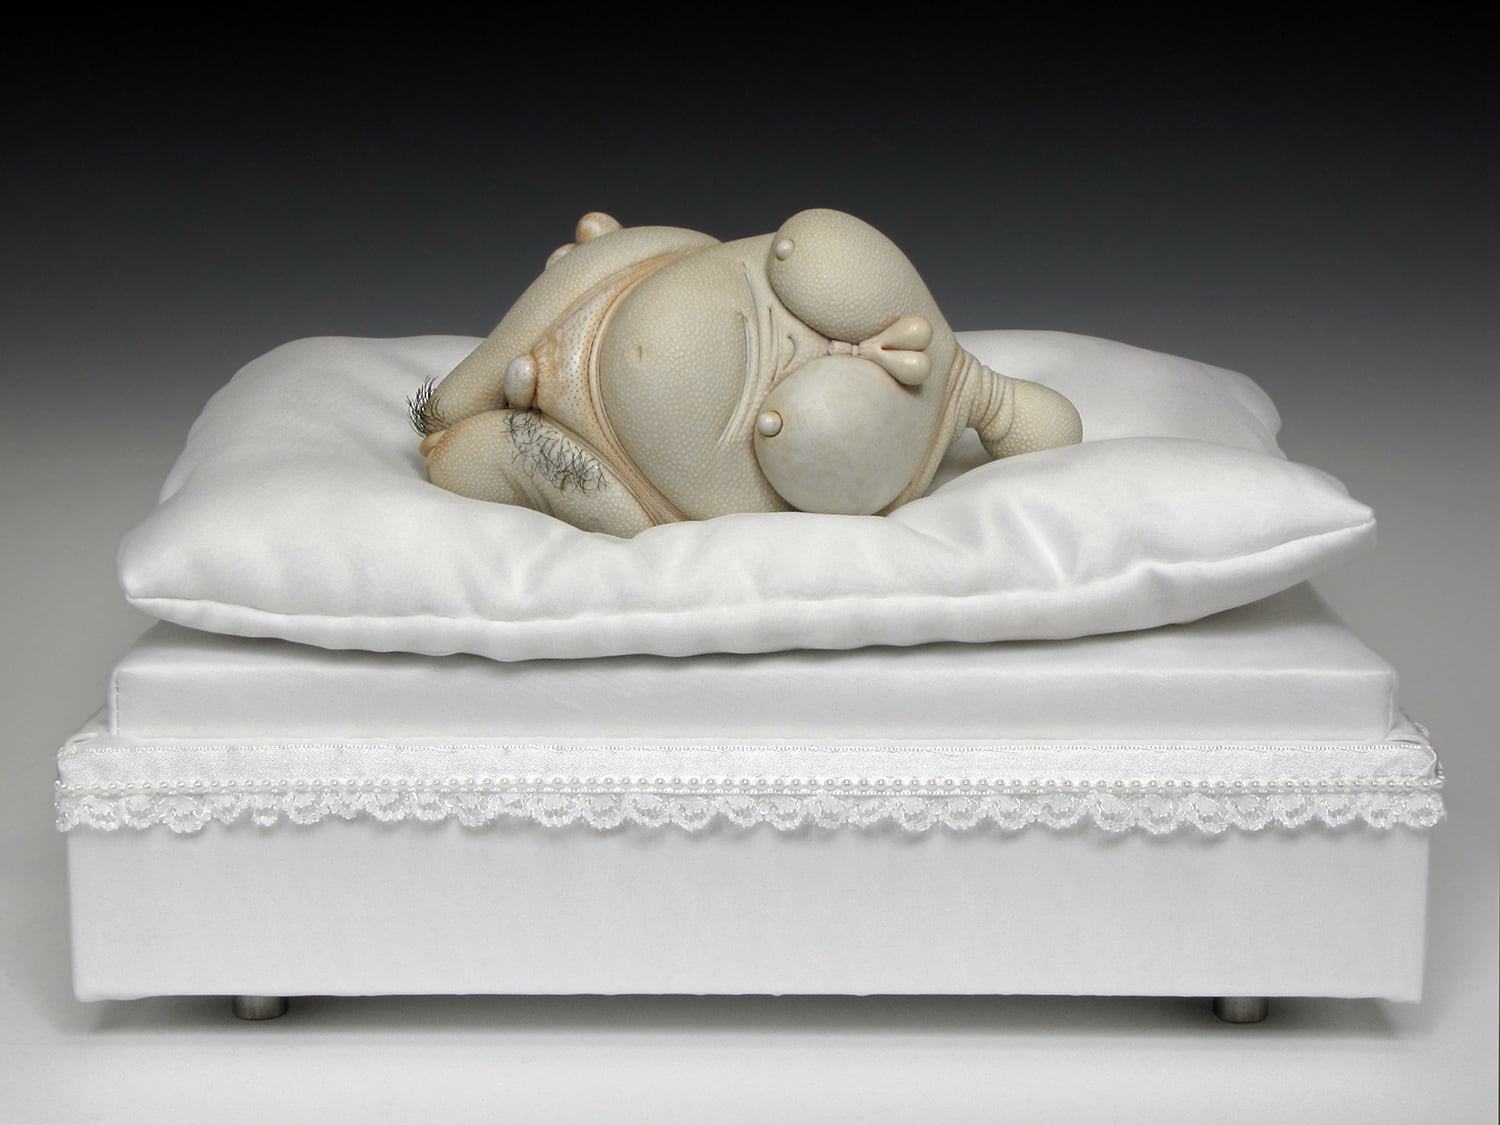 Jason Briggs "Pearl" (full view). Porcelain, hair, and mixed media sculptural ceramic art.